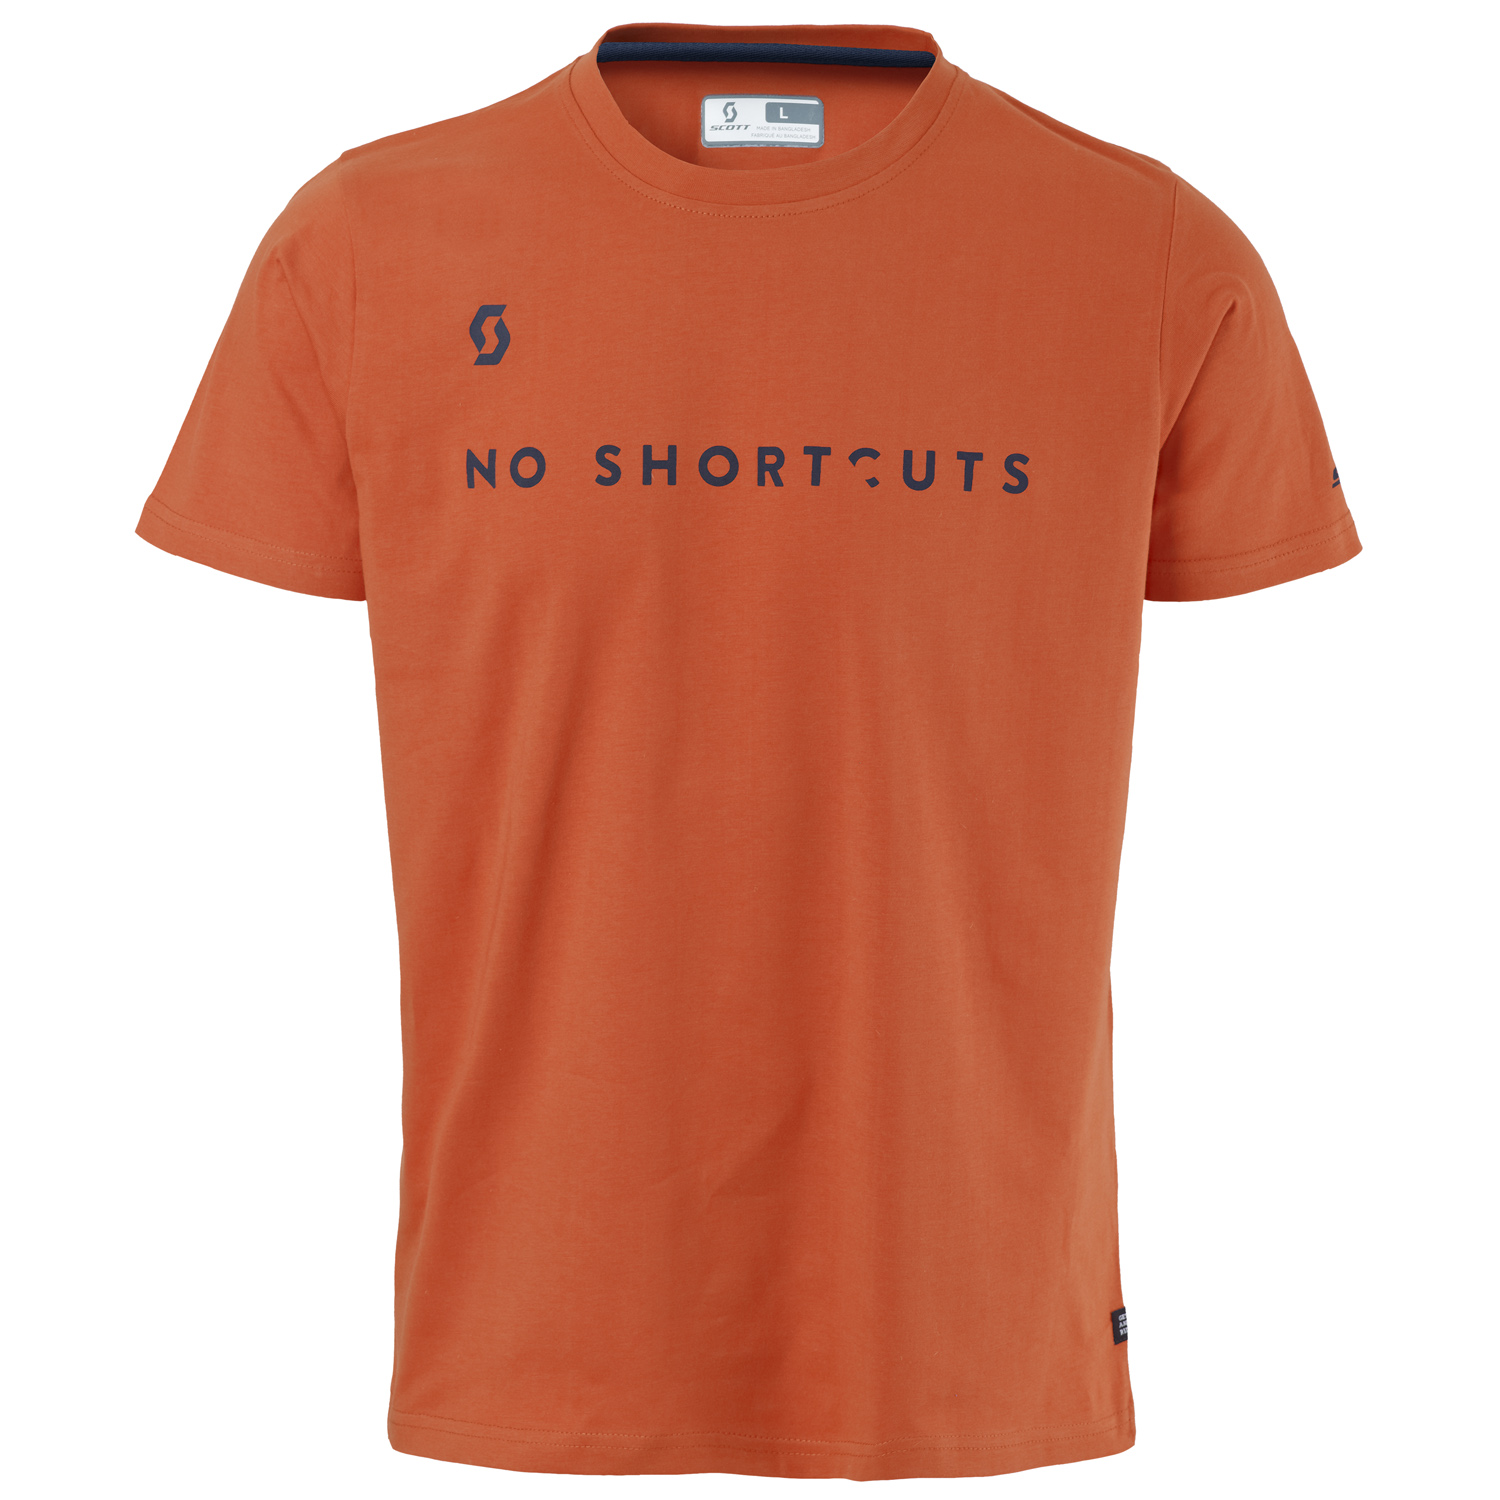 Scott T-Shirt 5 No Shortcuts Burnt Orange